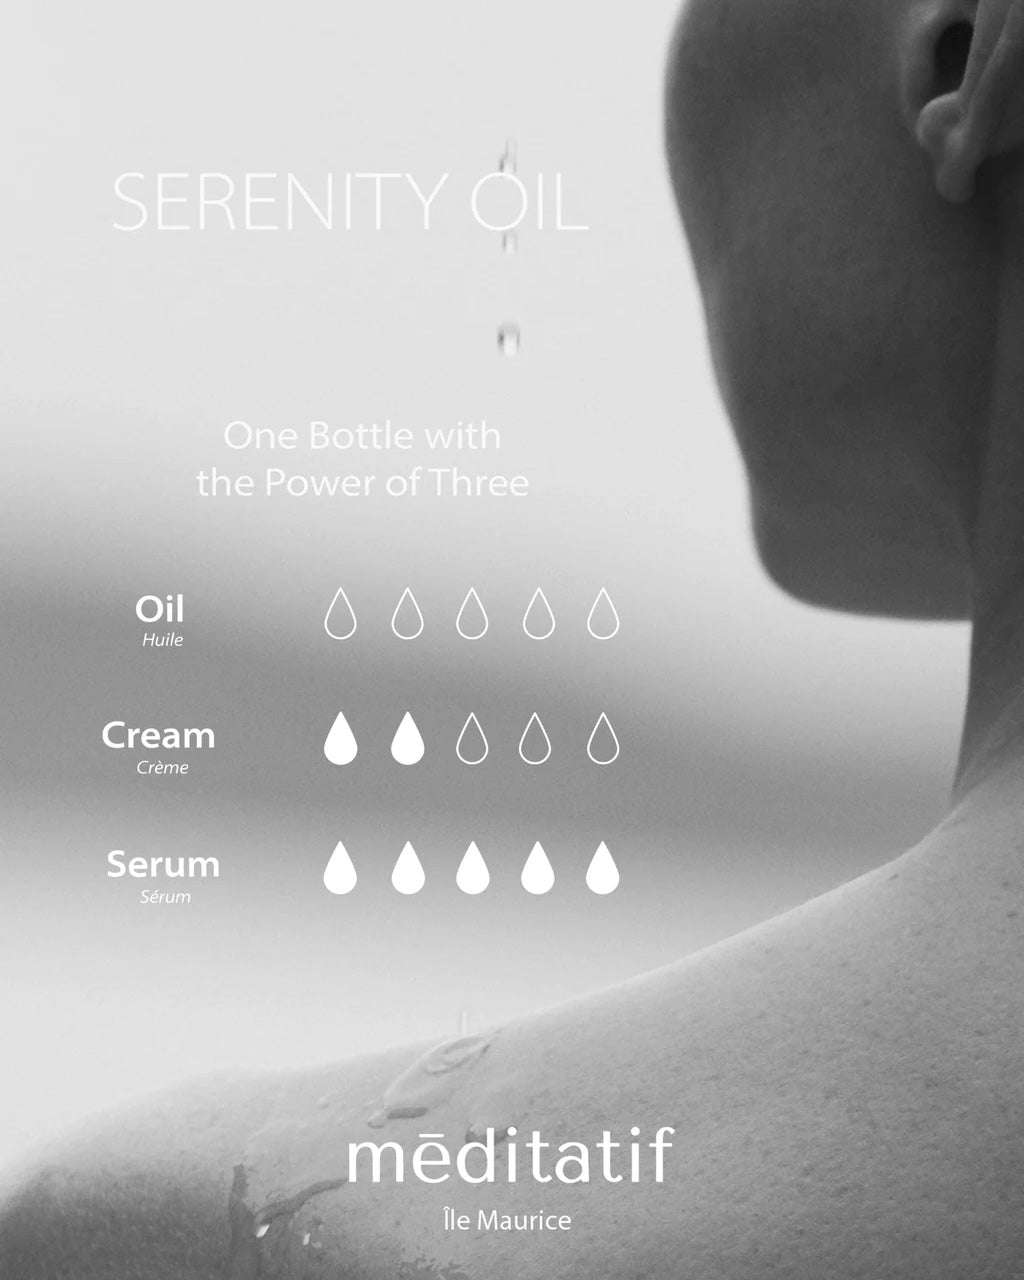 Santal Serenity Essential Oil 700 ml